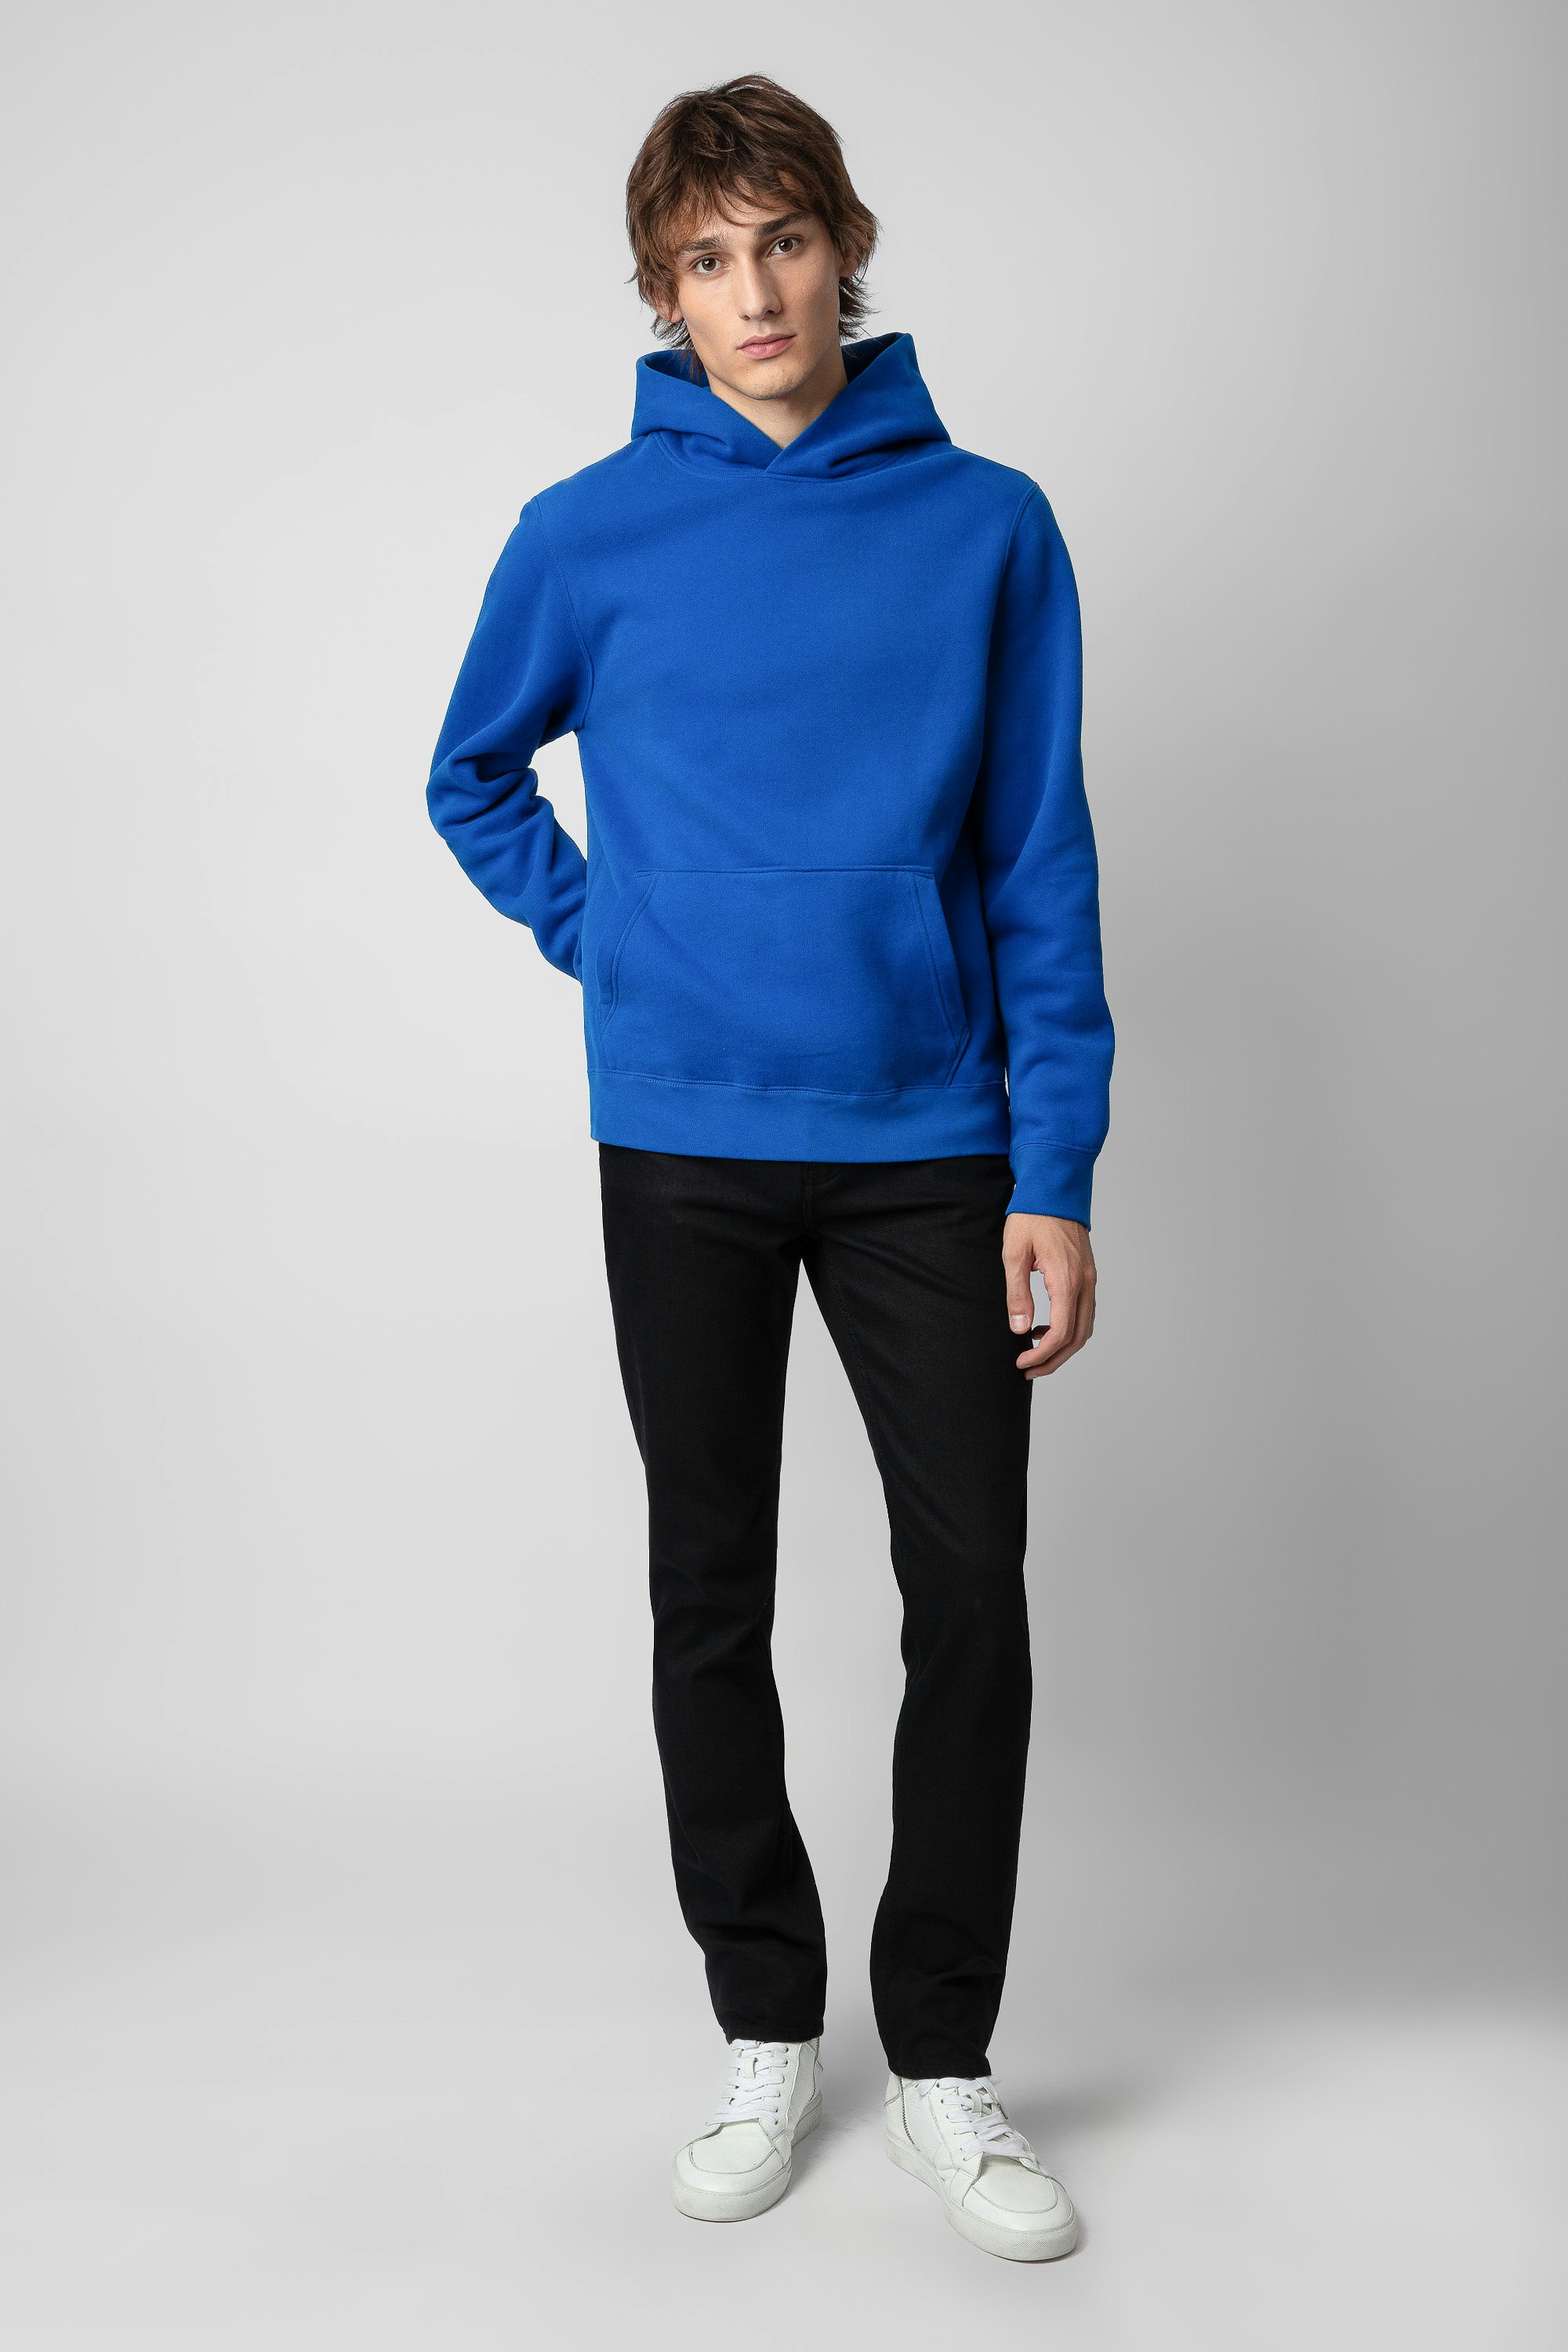 Sweatshirt Sanchi Fotoprint - Blaues Herren-Kapuzensweatshirt mit rückseitigem Bike-Fotoprint